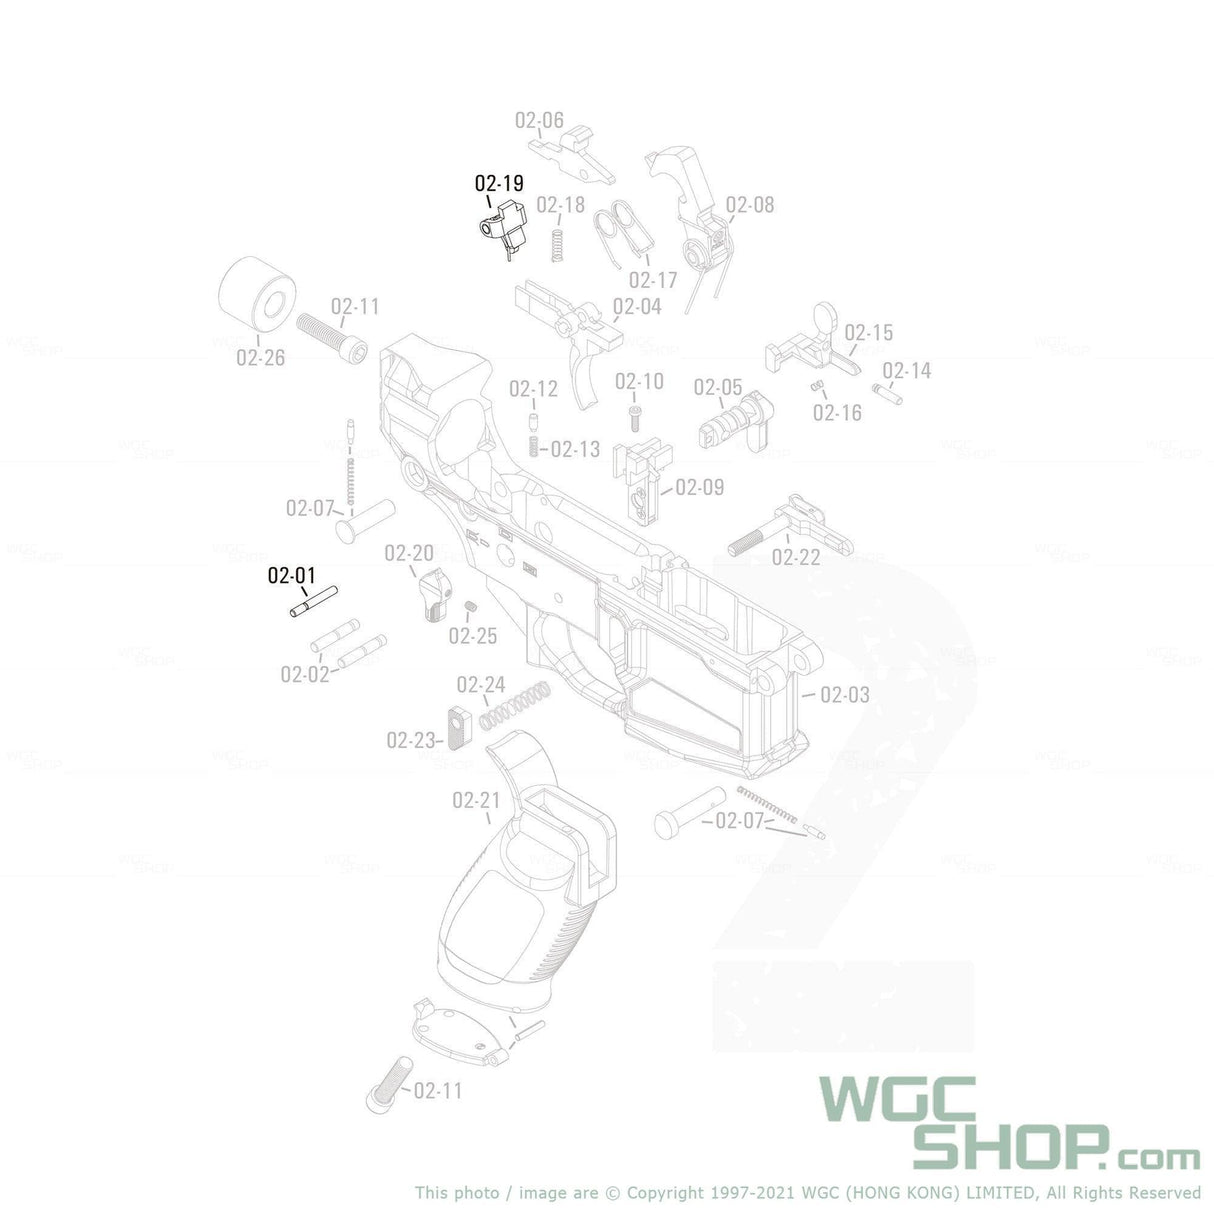 APFG Original Parts - Rattler GBB Auto Sear Unit ( 02-19 / 02-01 ) - WGC Shop